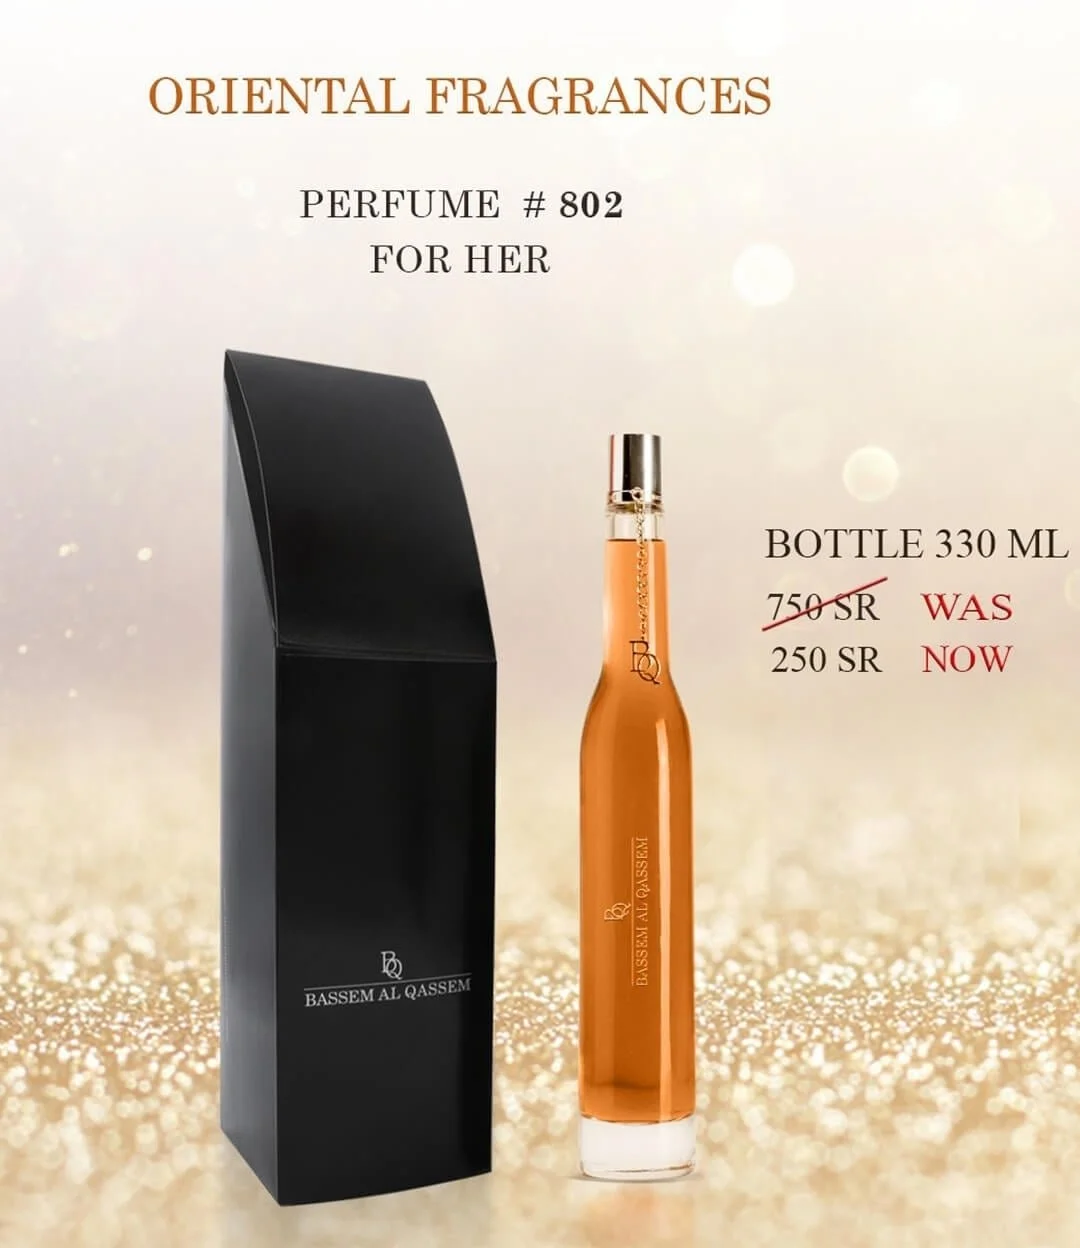 Perfume #802 Oriental Fragrance for Her by Bassem Al Qassem 